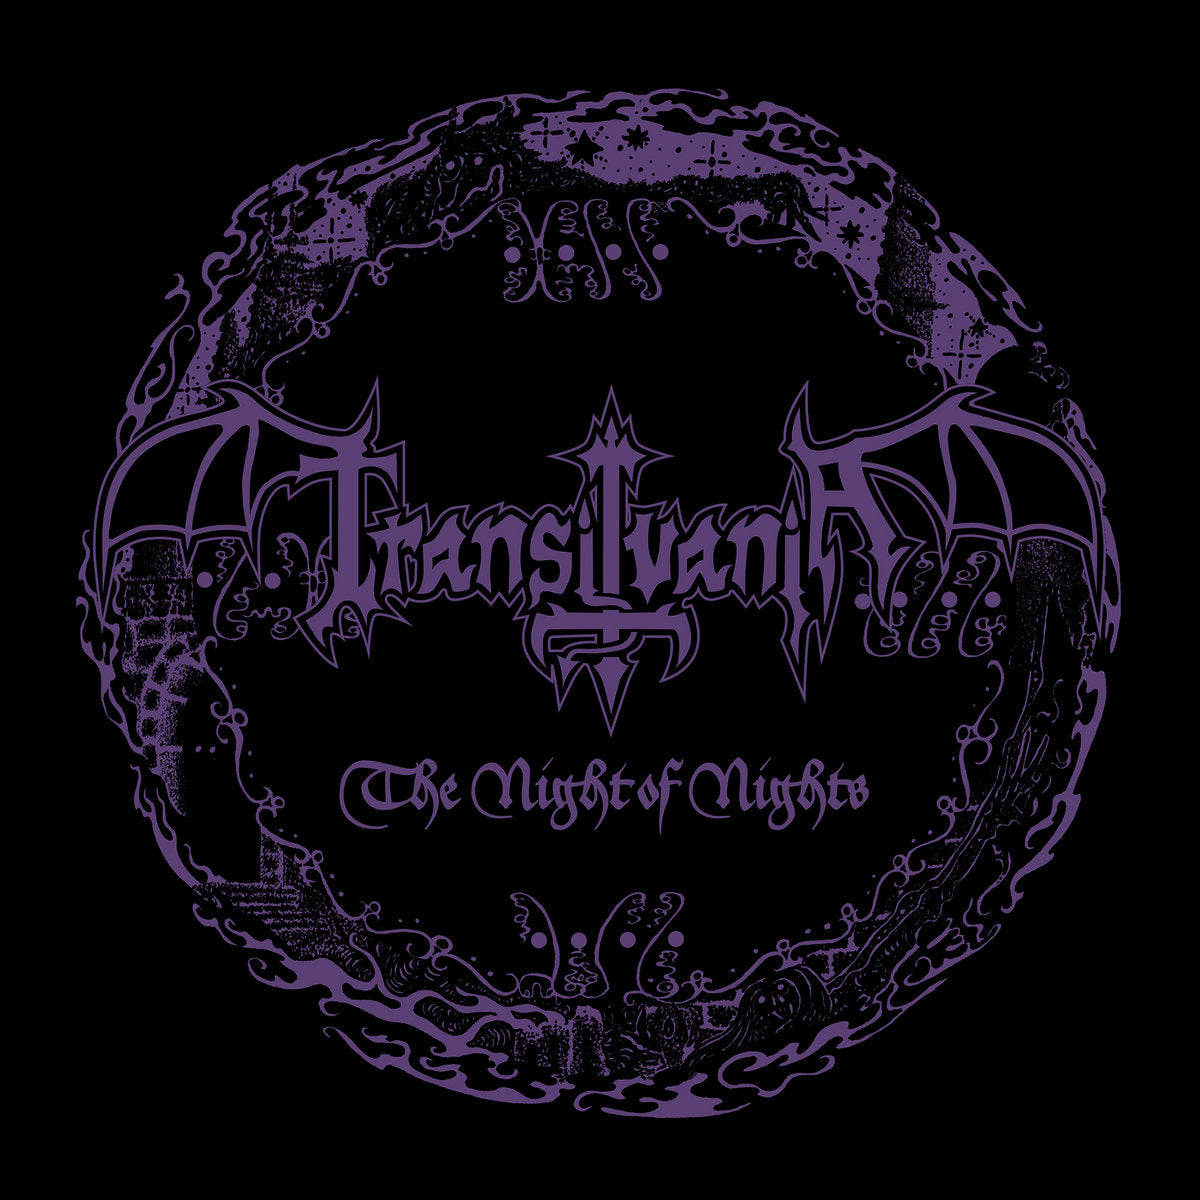 Transilvania - The Night of Nights LP